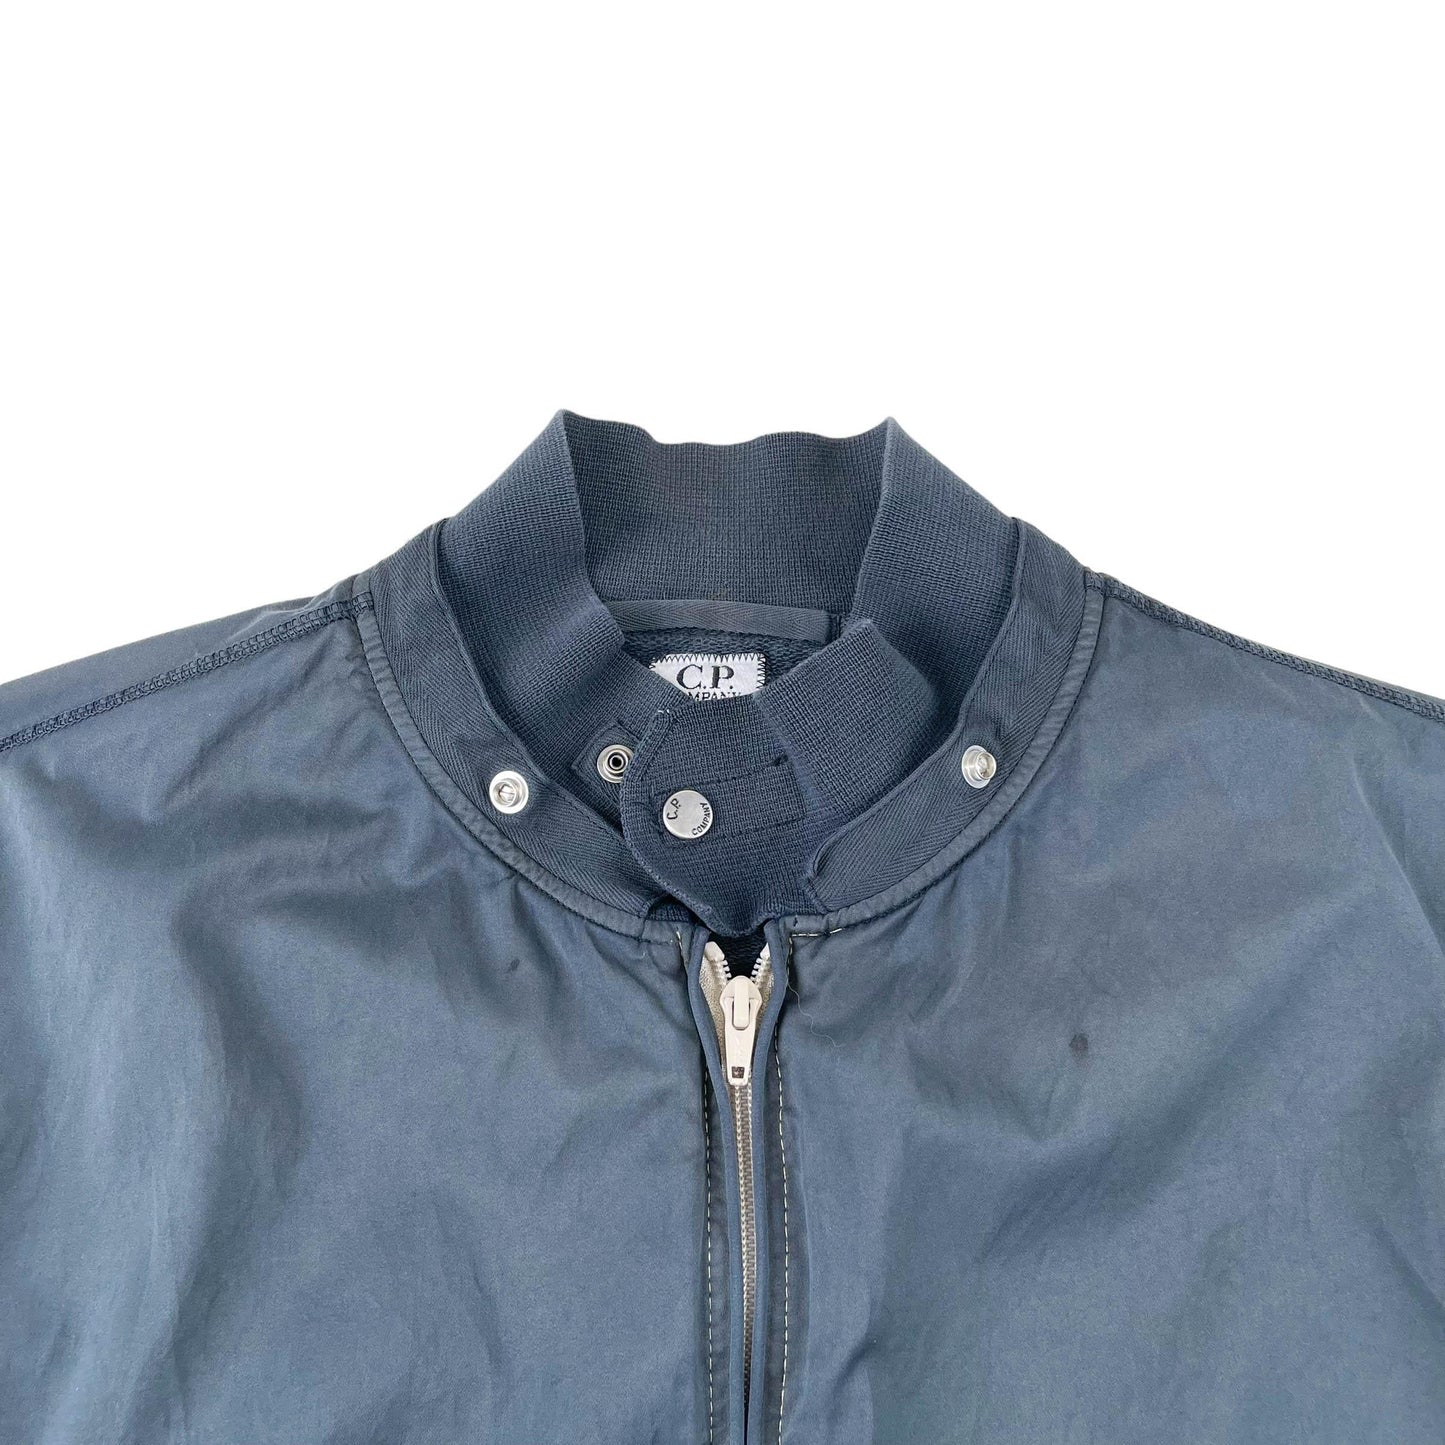 CP Company Sweatshirt Jacket (XXL) - Known Source